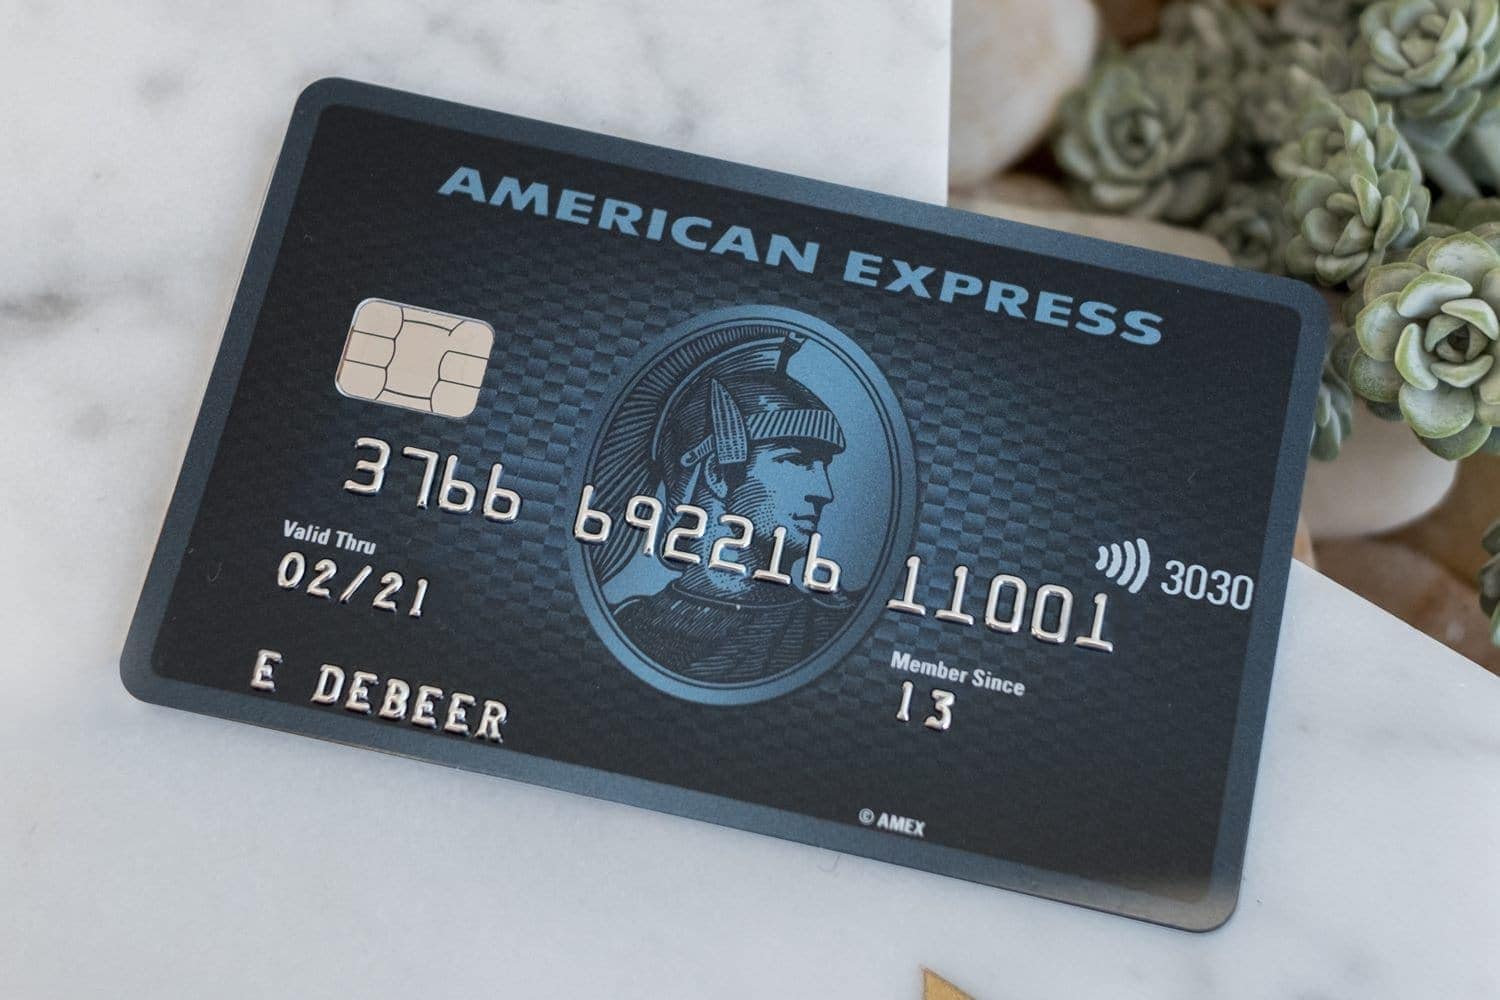 Amex Explorer Credit Card picture